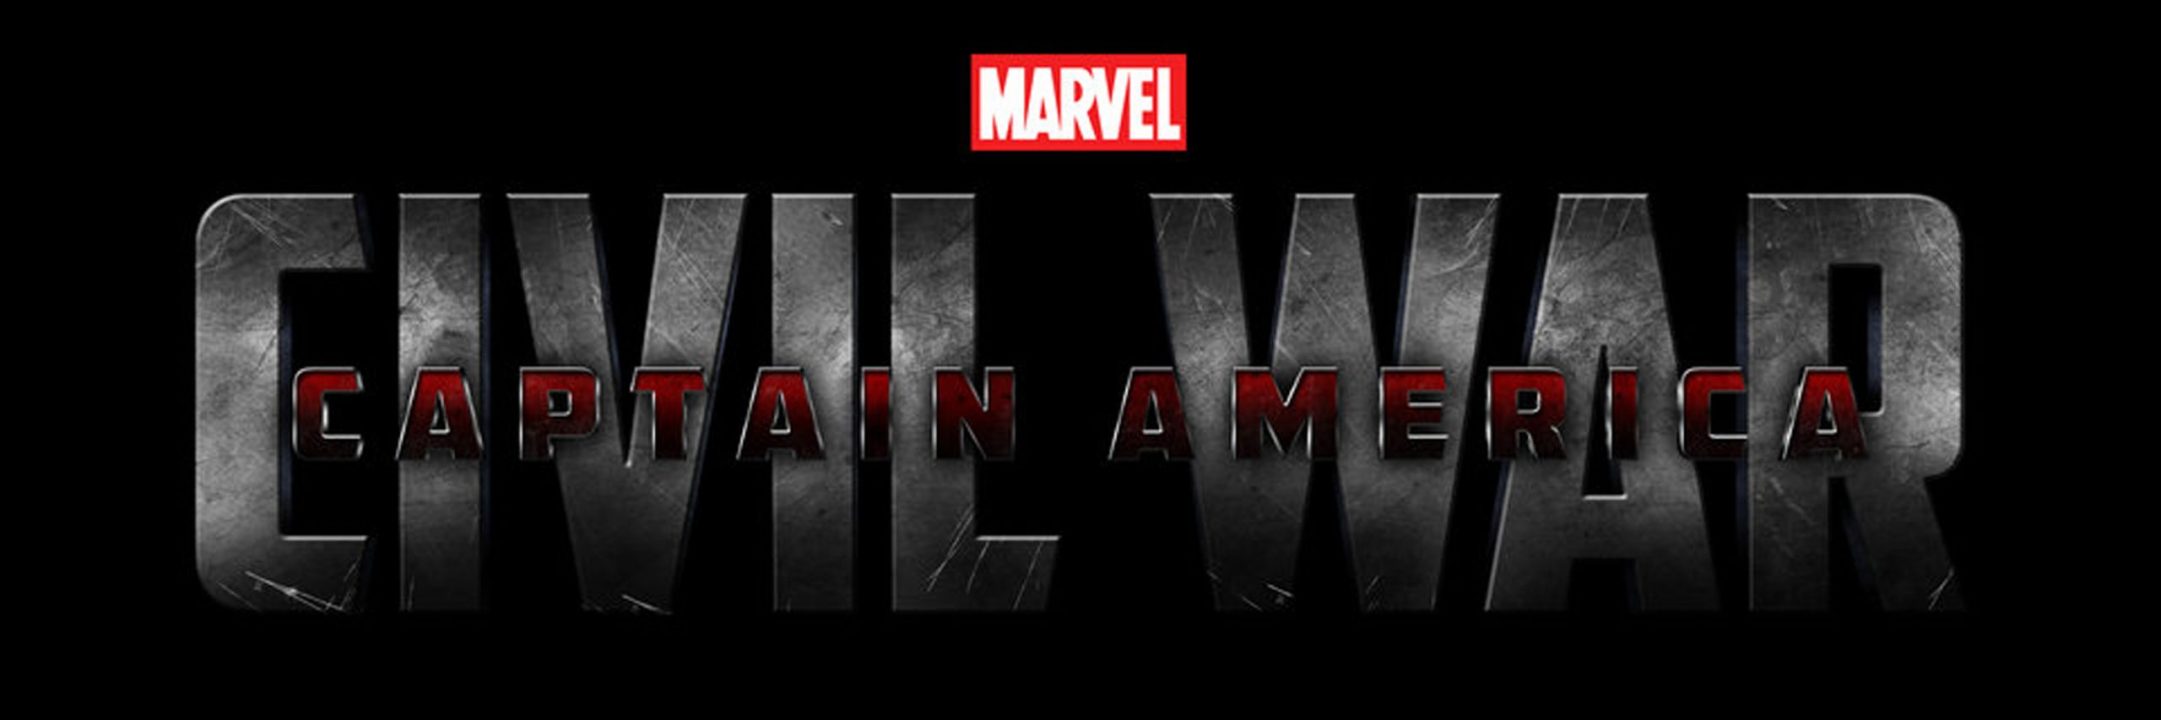 Captain America Civil War Background image